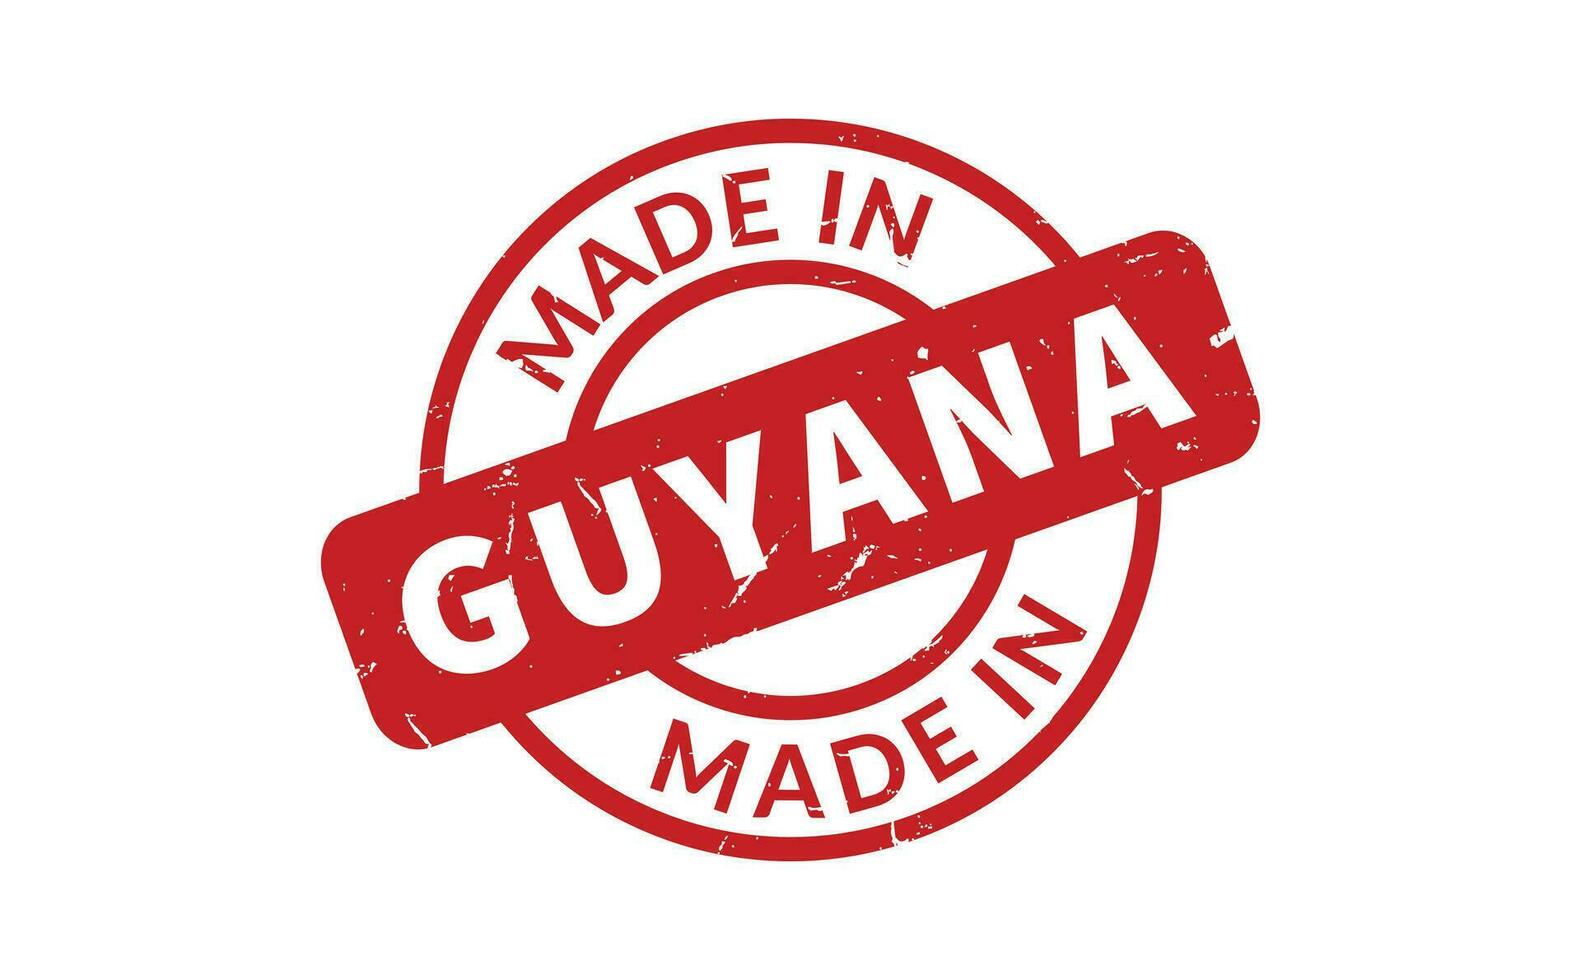 gemacht im Guyana Gummi Briefmarke vektor